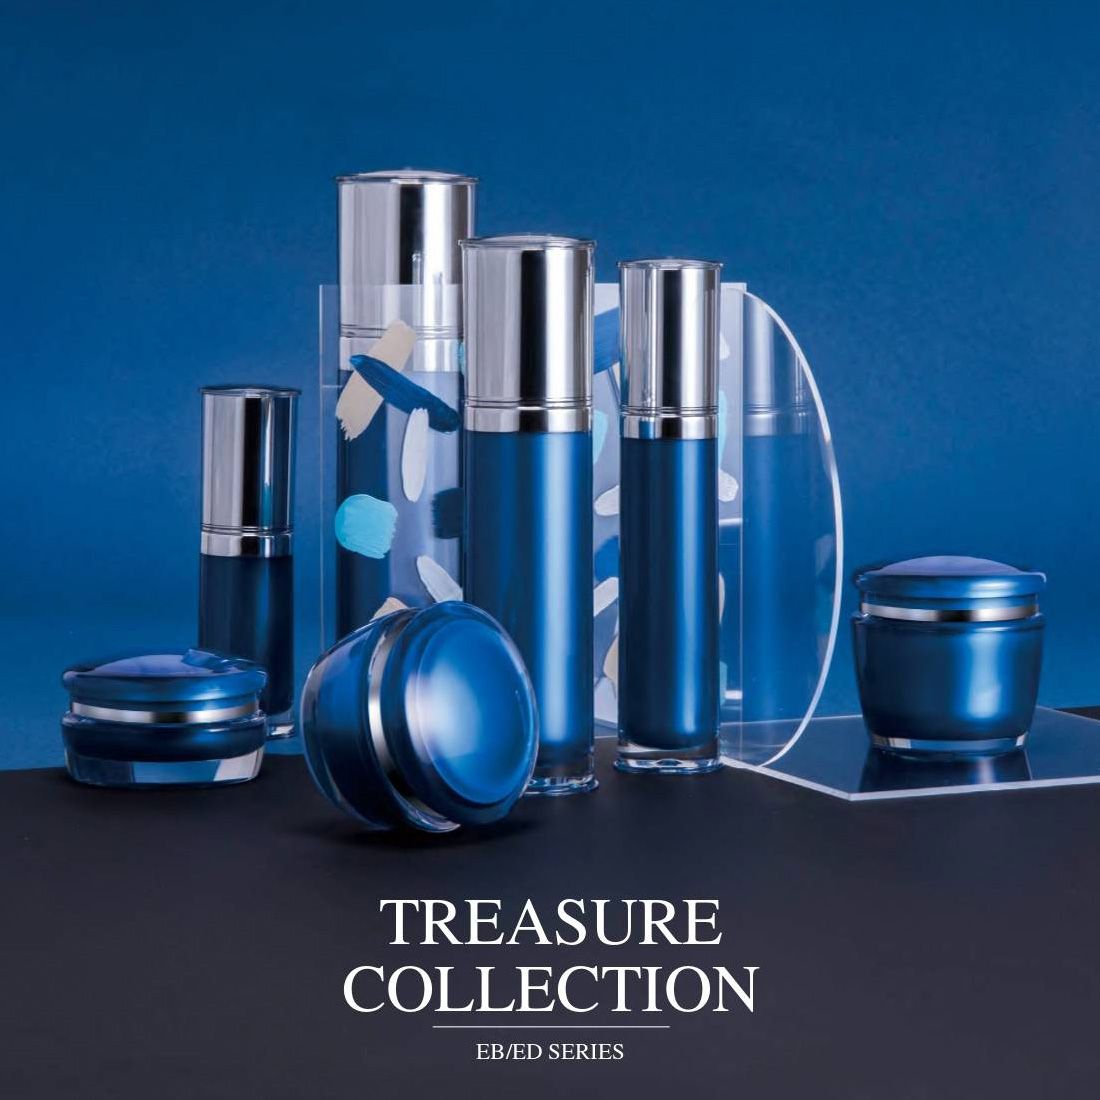 Treasure Collection (Luxus-Kosmetik- und Hautpflegeverpackungen aus Acryl) EB/ED-Serie